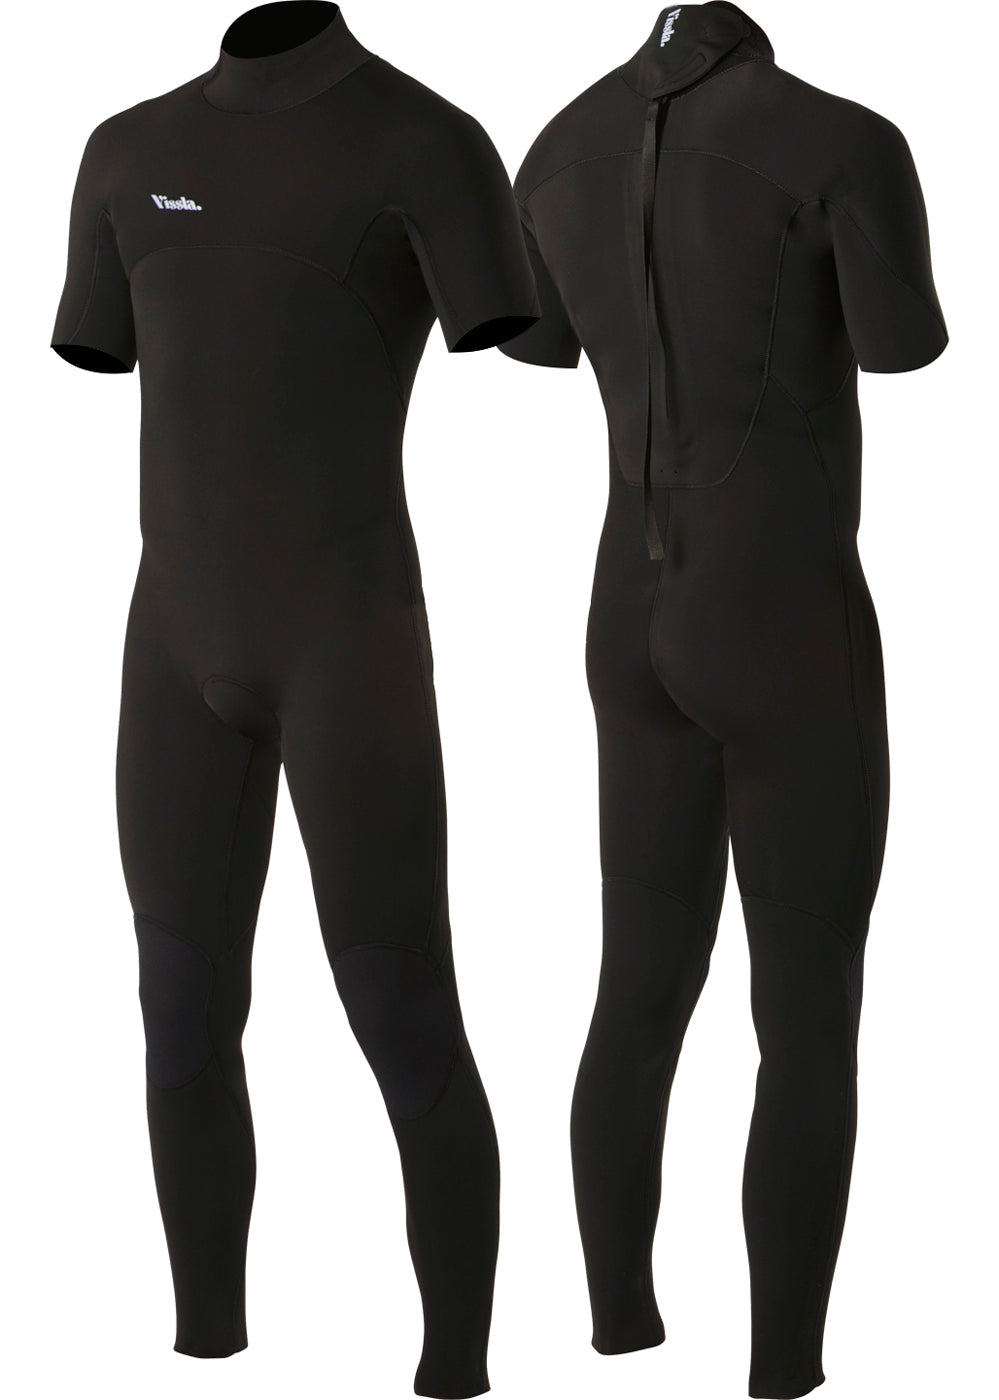 Vissla 7 Seas 2-2 Short Sleeve Back Zip Full Suit - Black - Sun Diego Boardshop